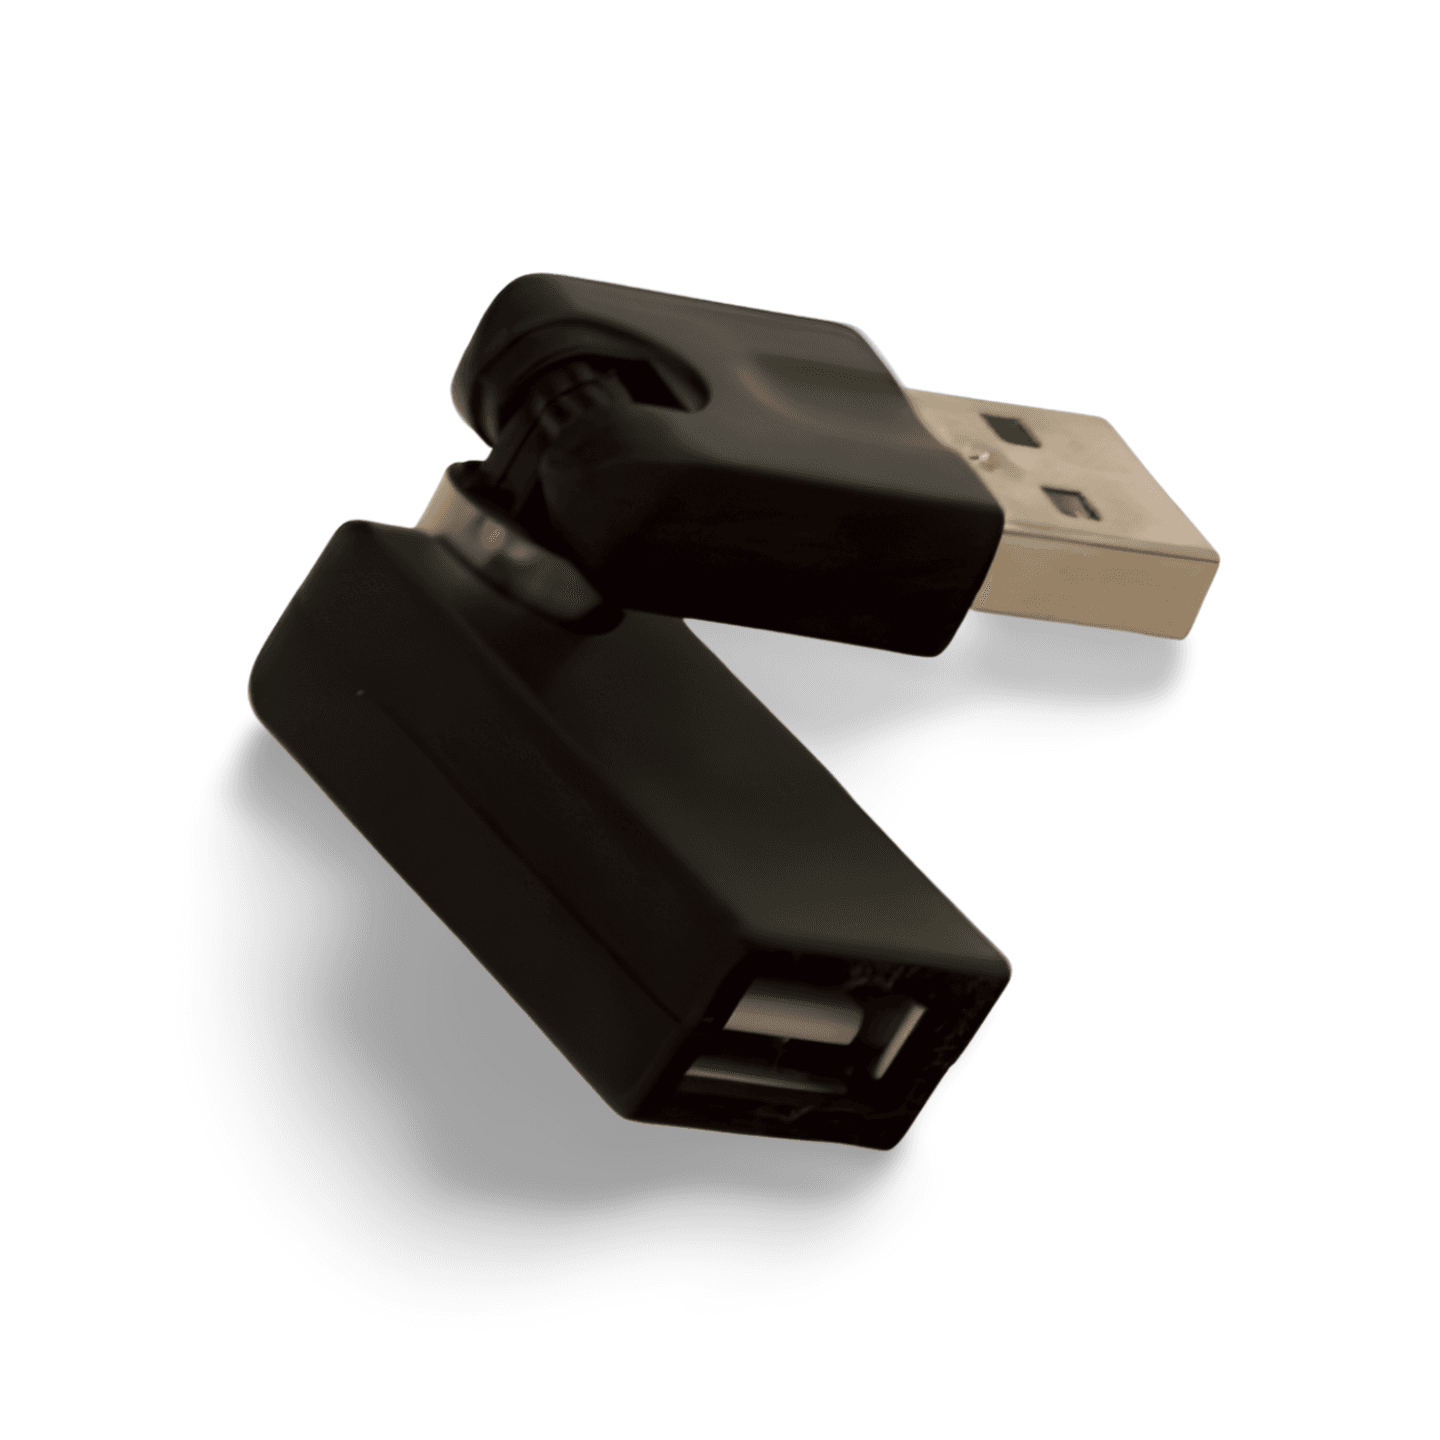 Flex USB Adapter Swivel 360 Degree Male to Female Adapter Plug black